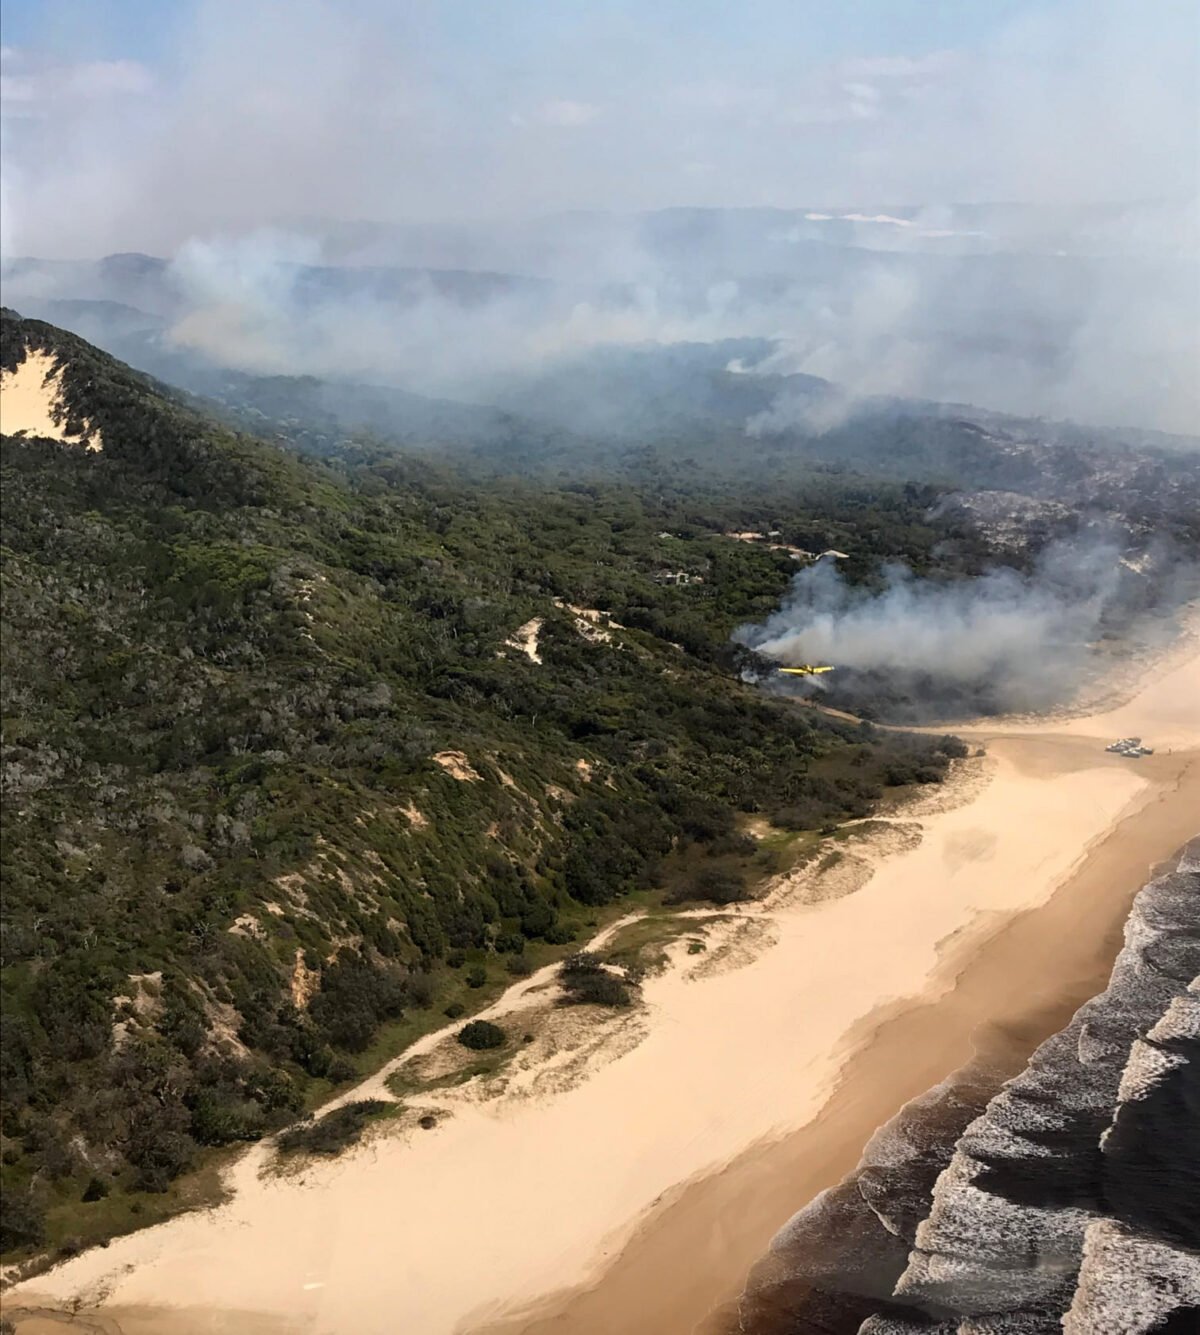 Fraser Island, November 30, 2020. (Queensland Fire and Emergency Services)